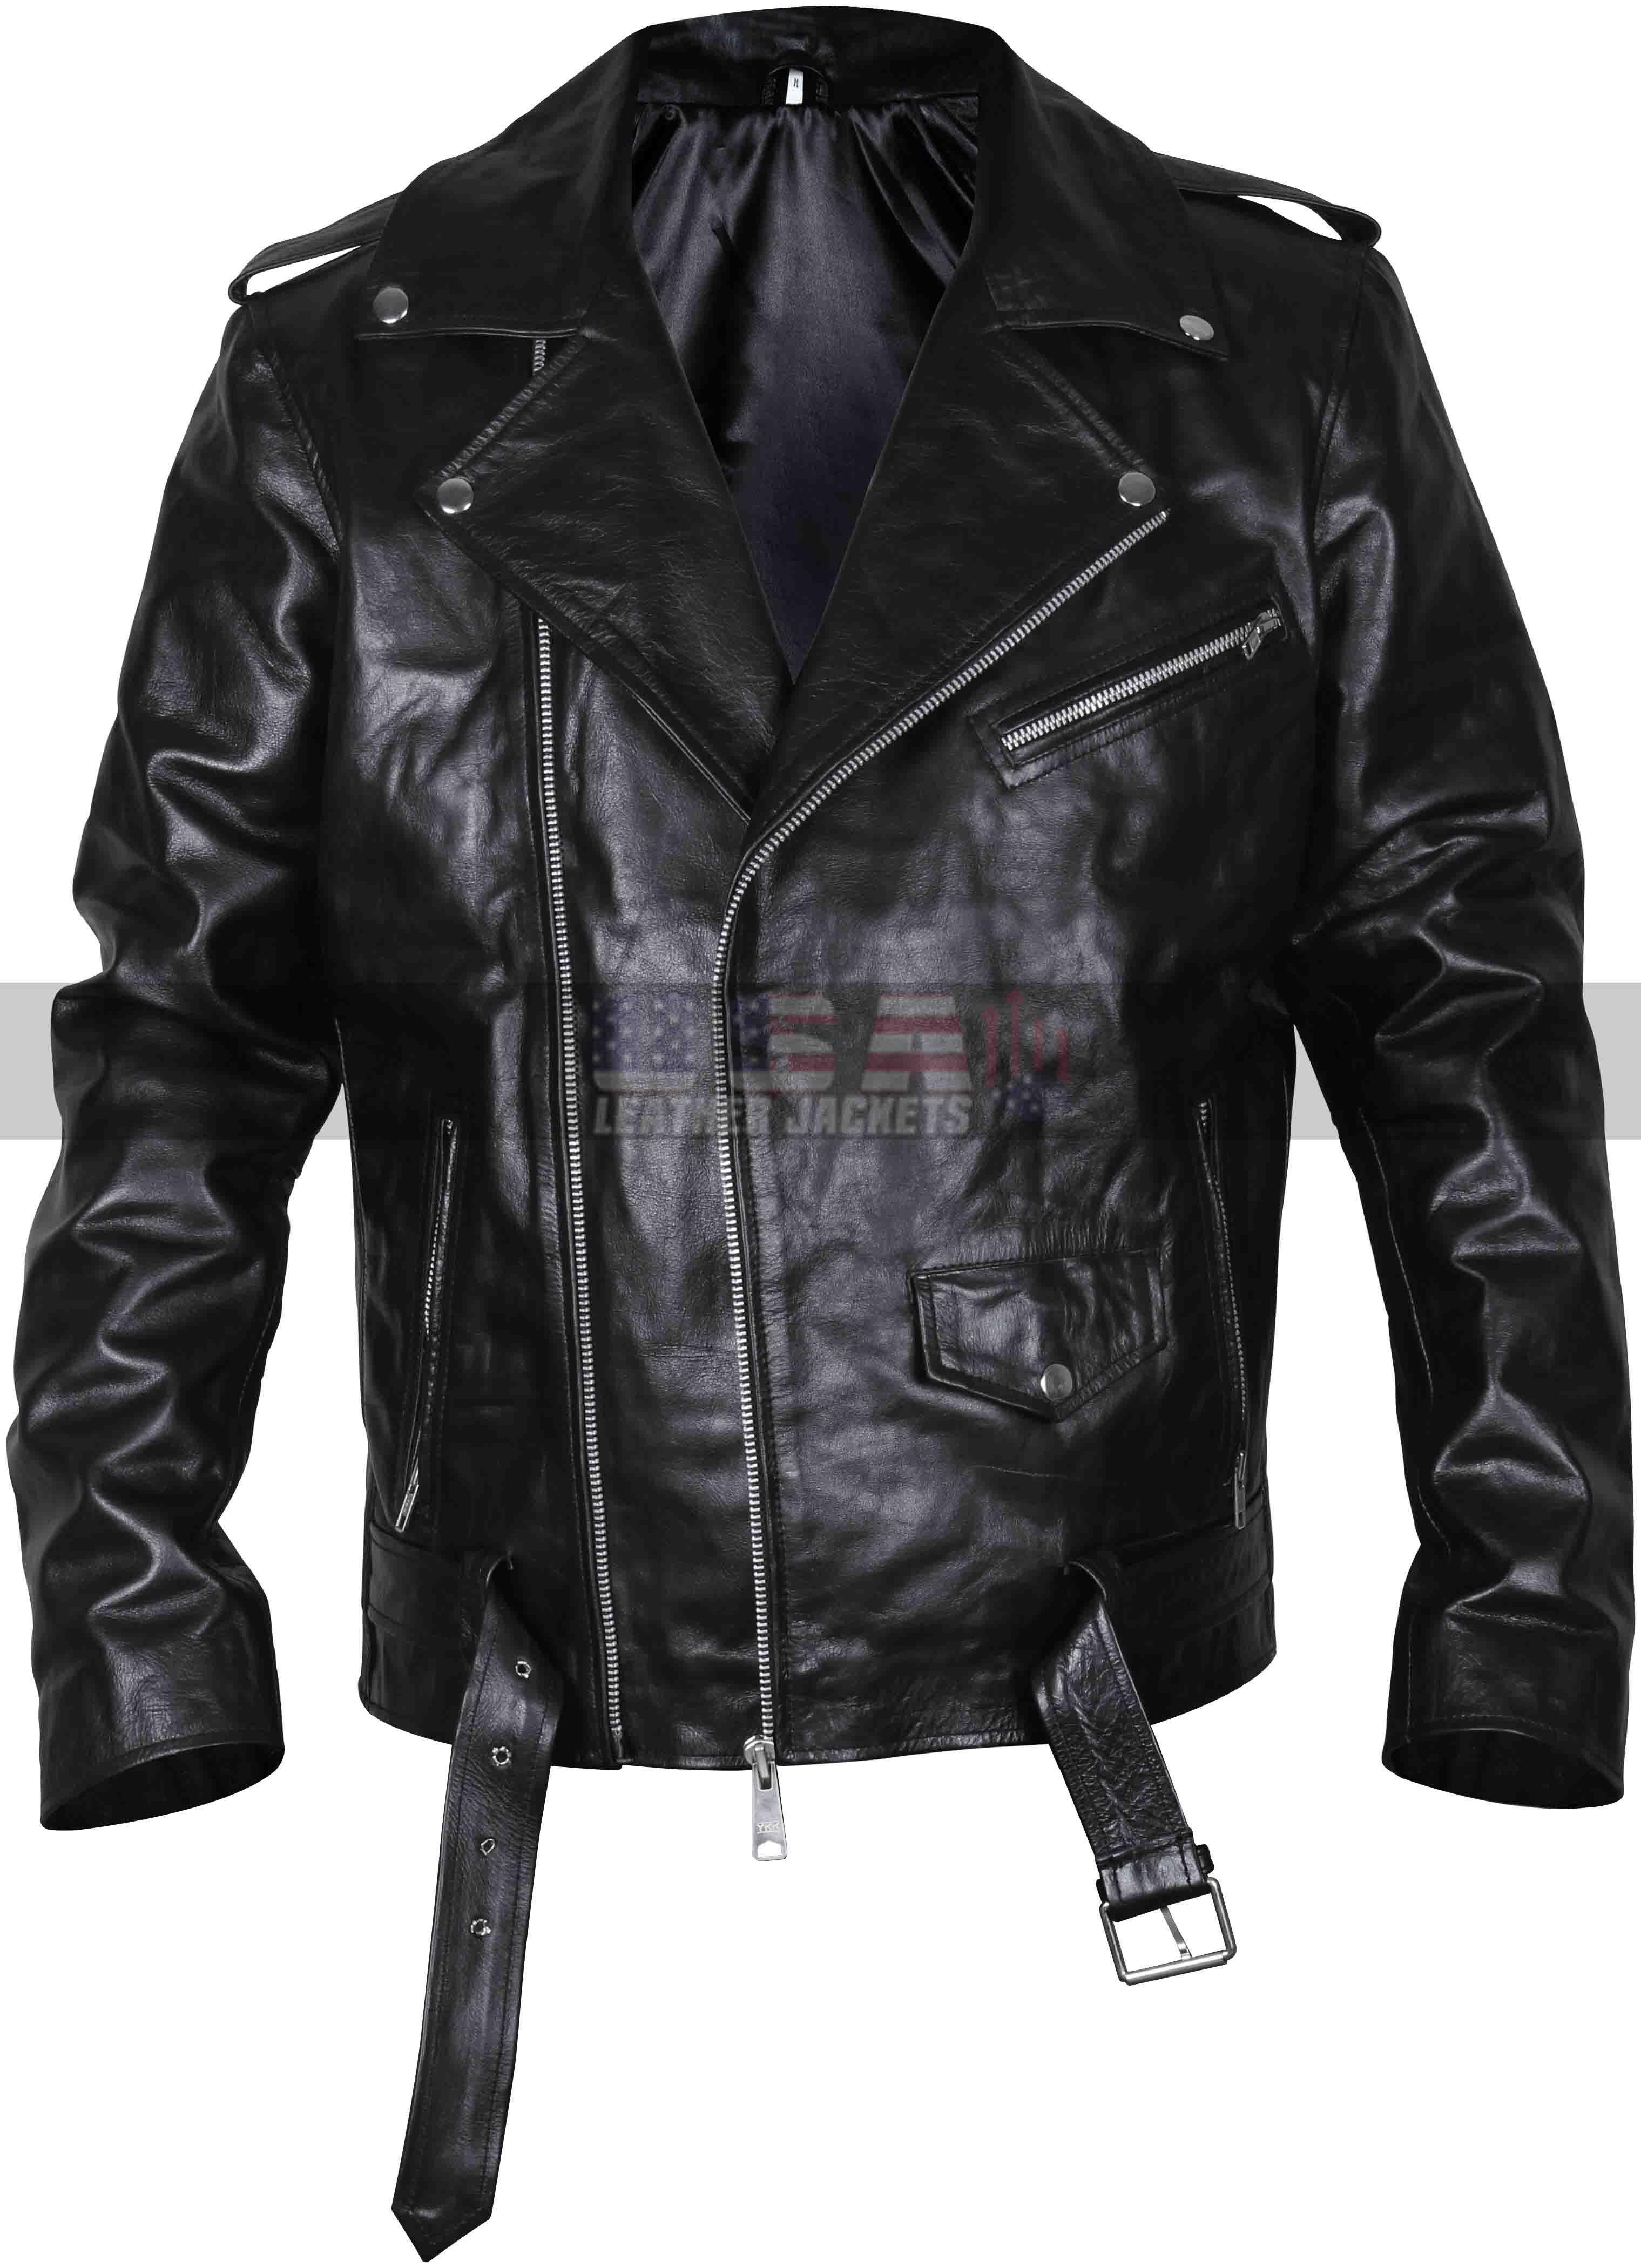 Cafe Racer Classic Brando Biker Style Black Leather Jacket